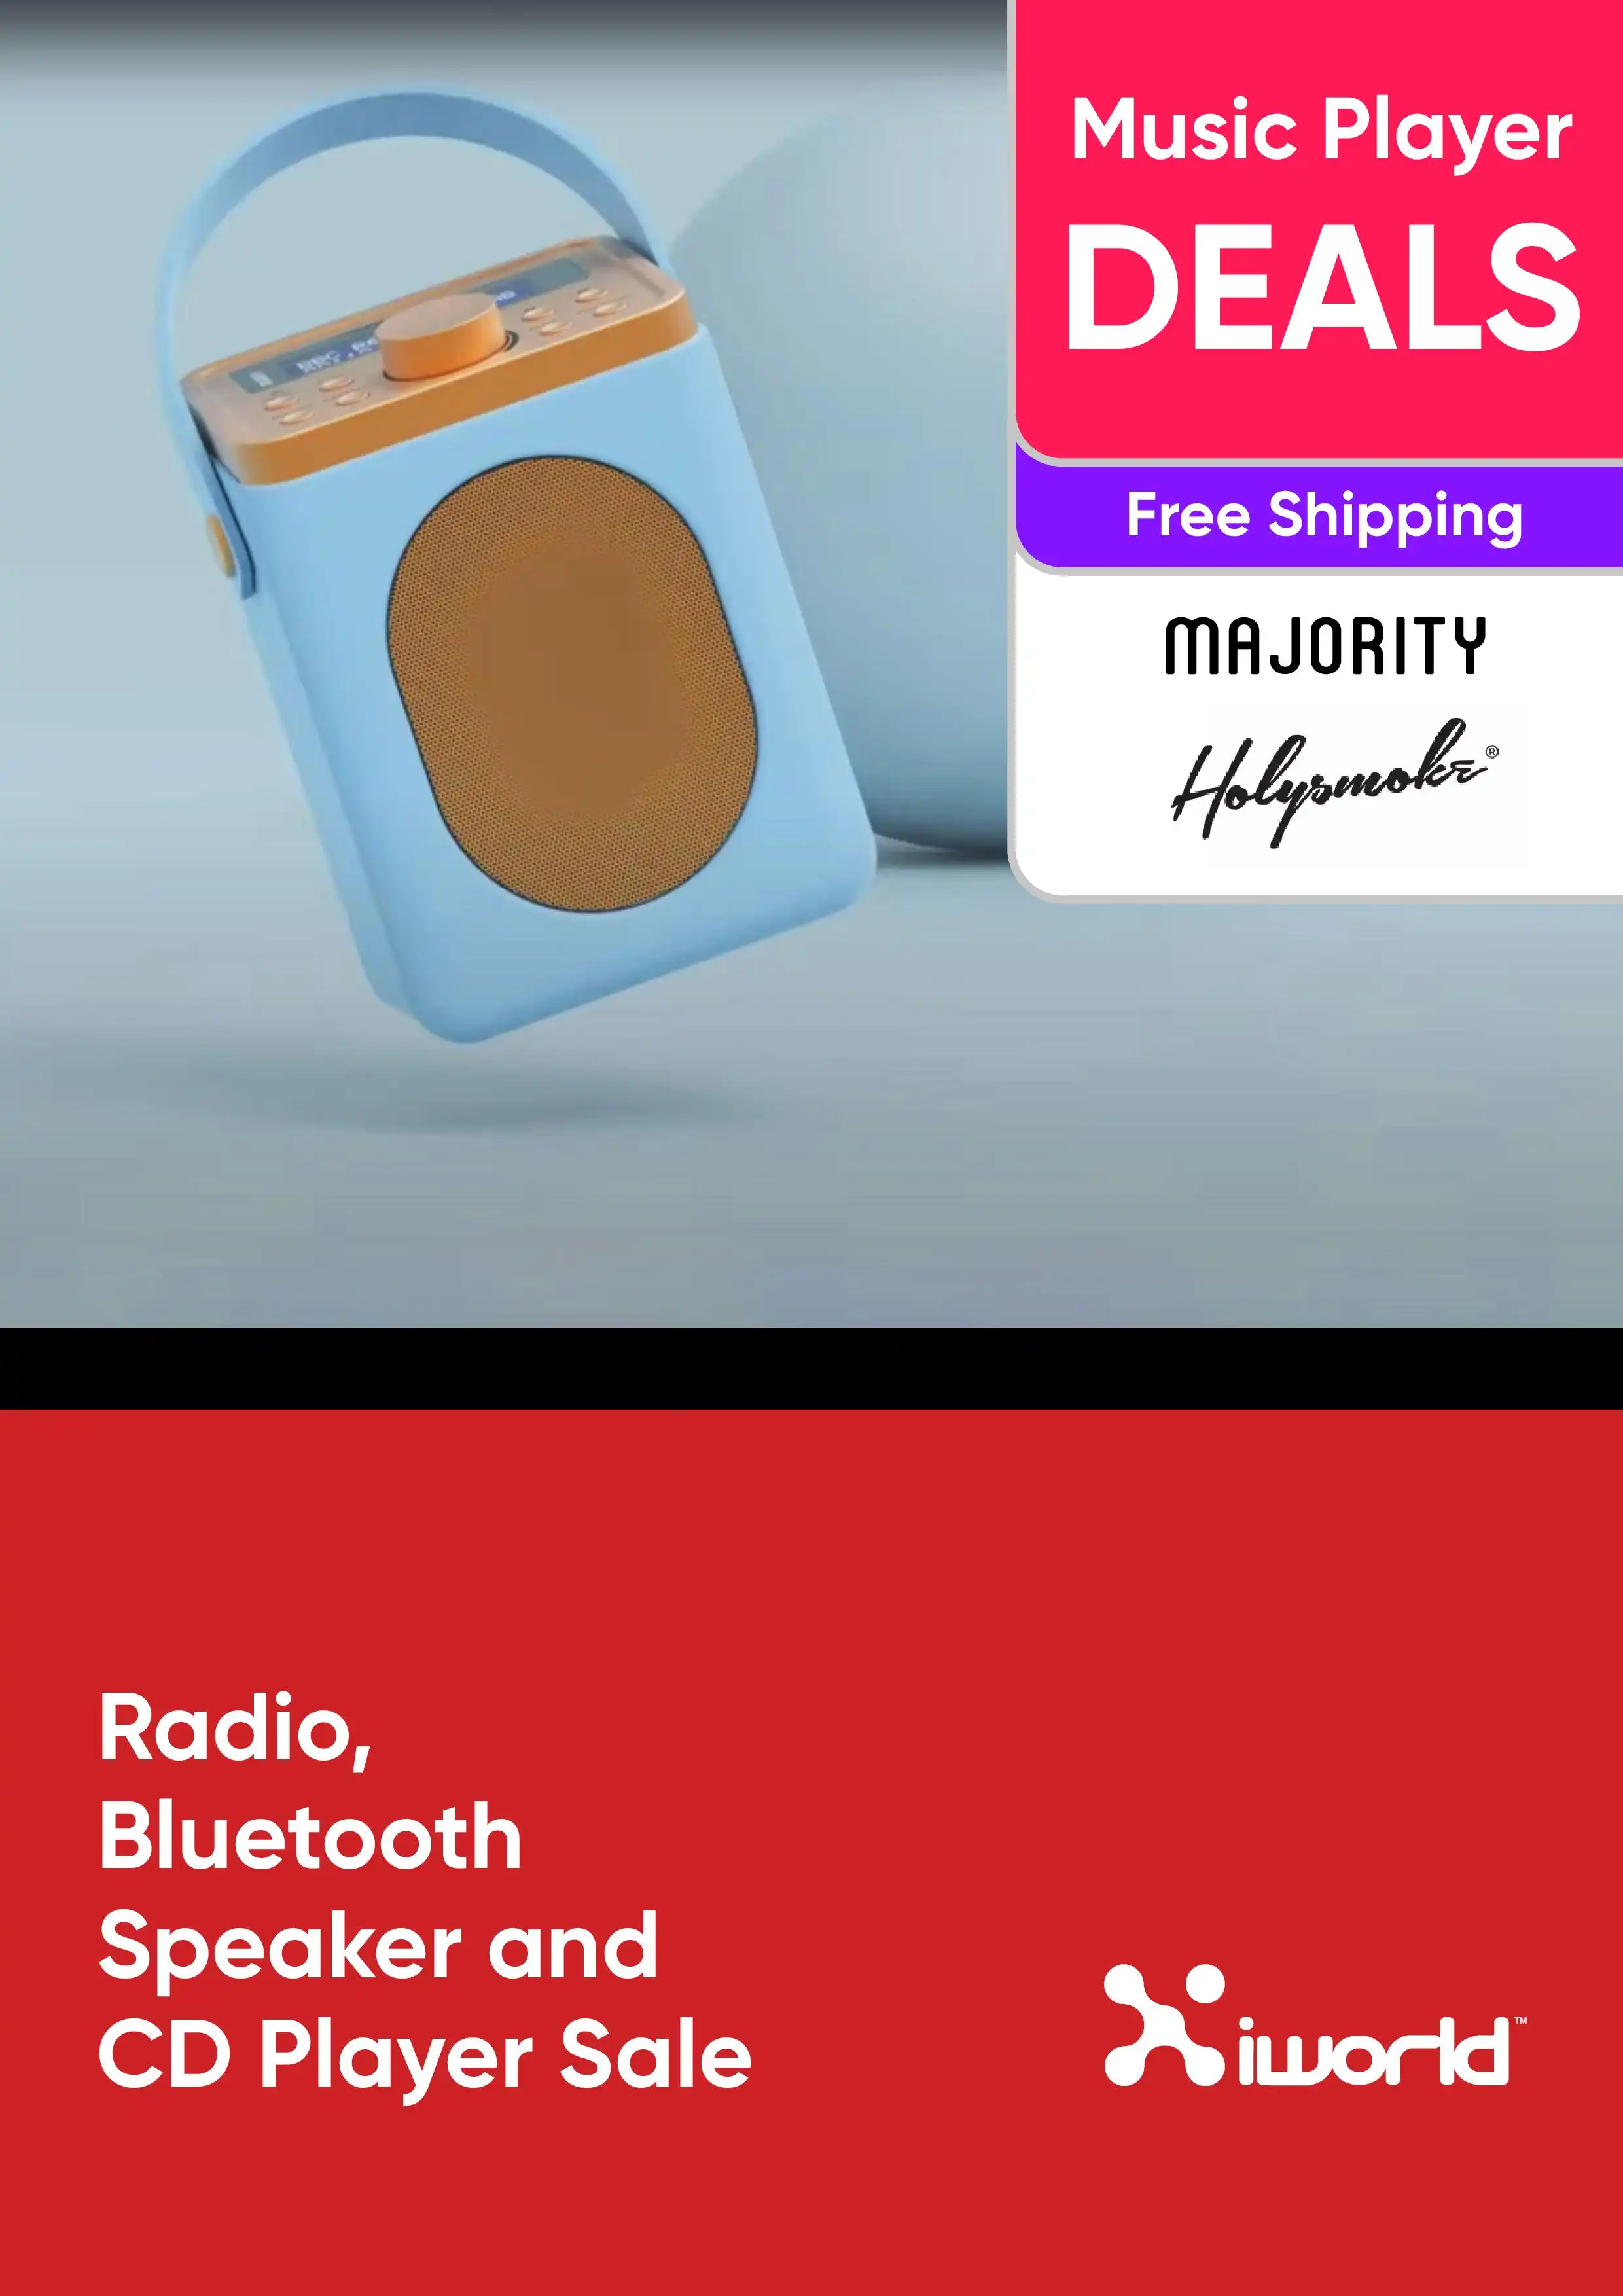 Music Player Sale: Radios, Bluetooth Speakers, Soundbars and More – Majority, Holysmoke